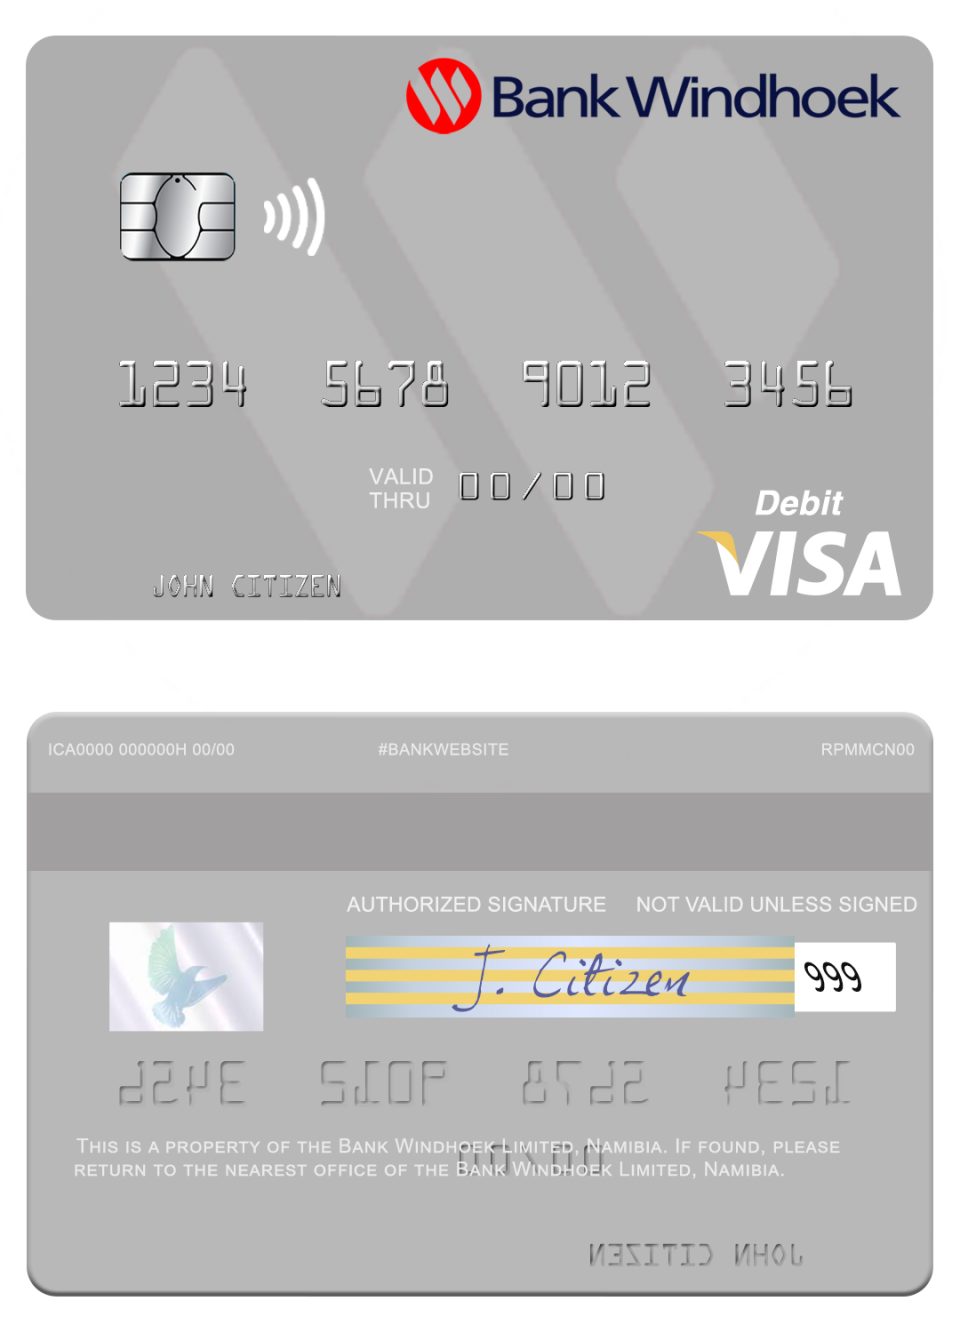 Fillable Namibia Bank Windhoek Limited visa debit card Templates | Layer-Based PSD